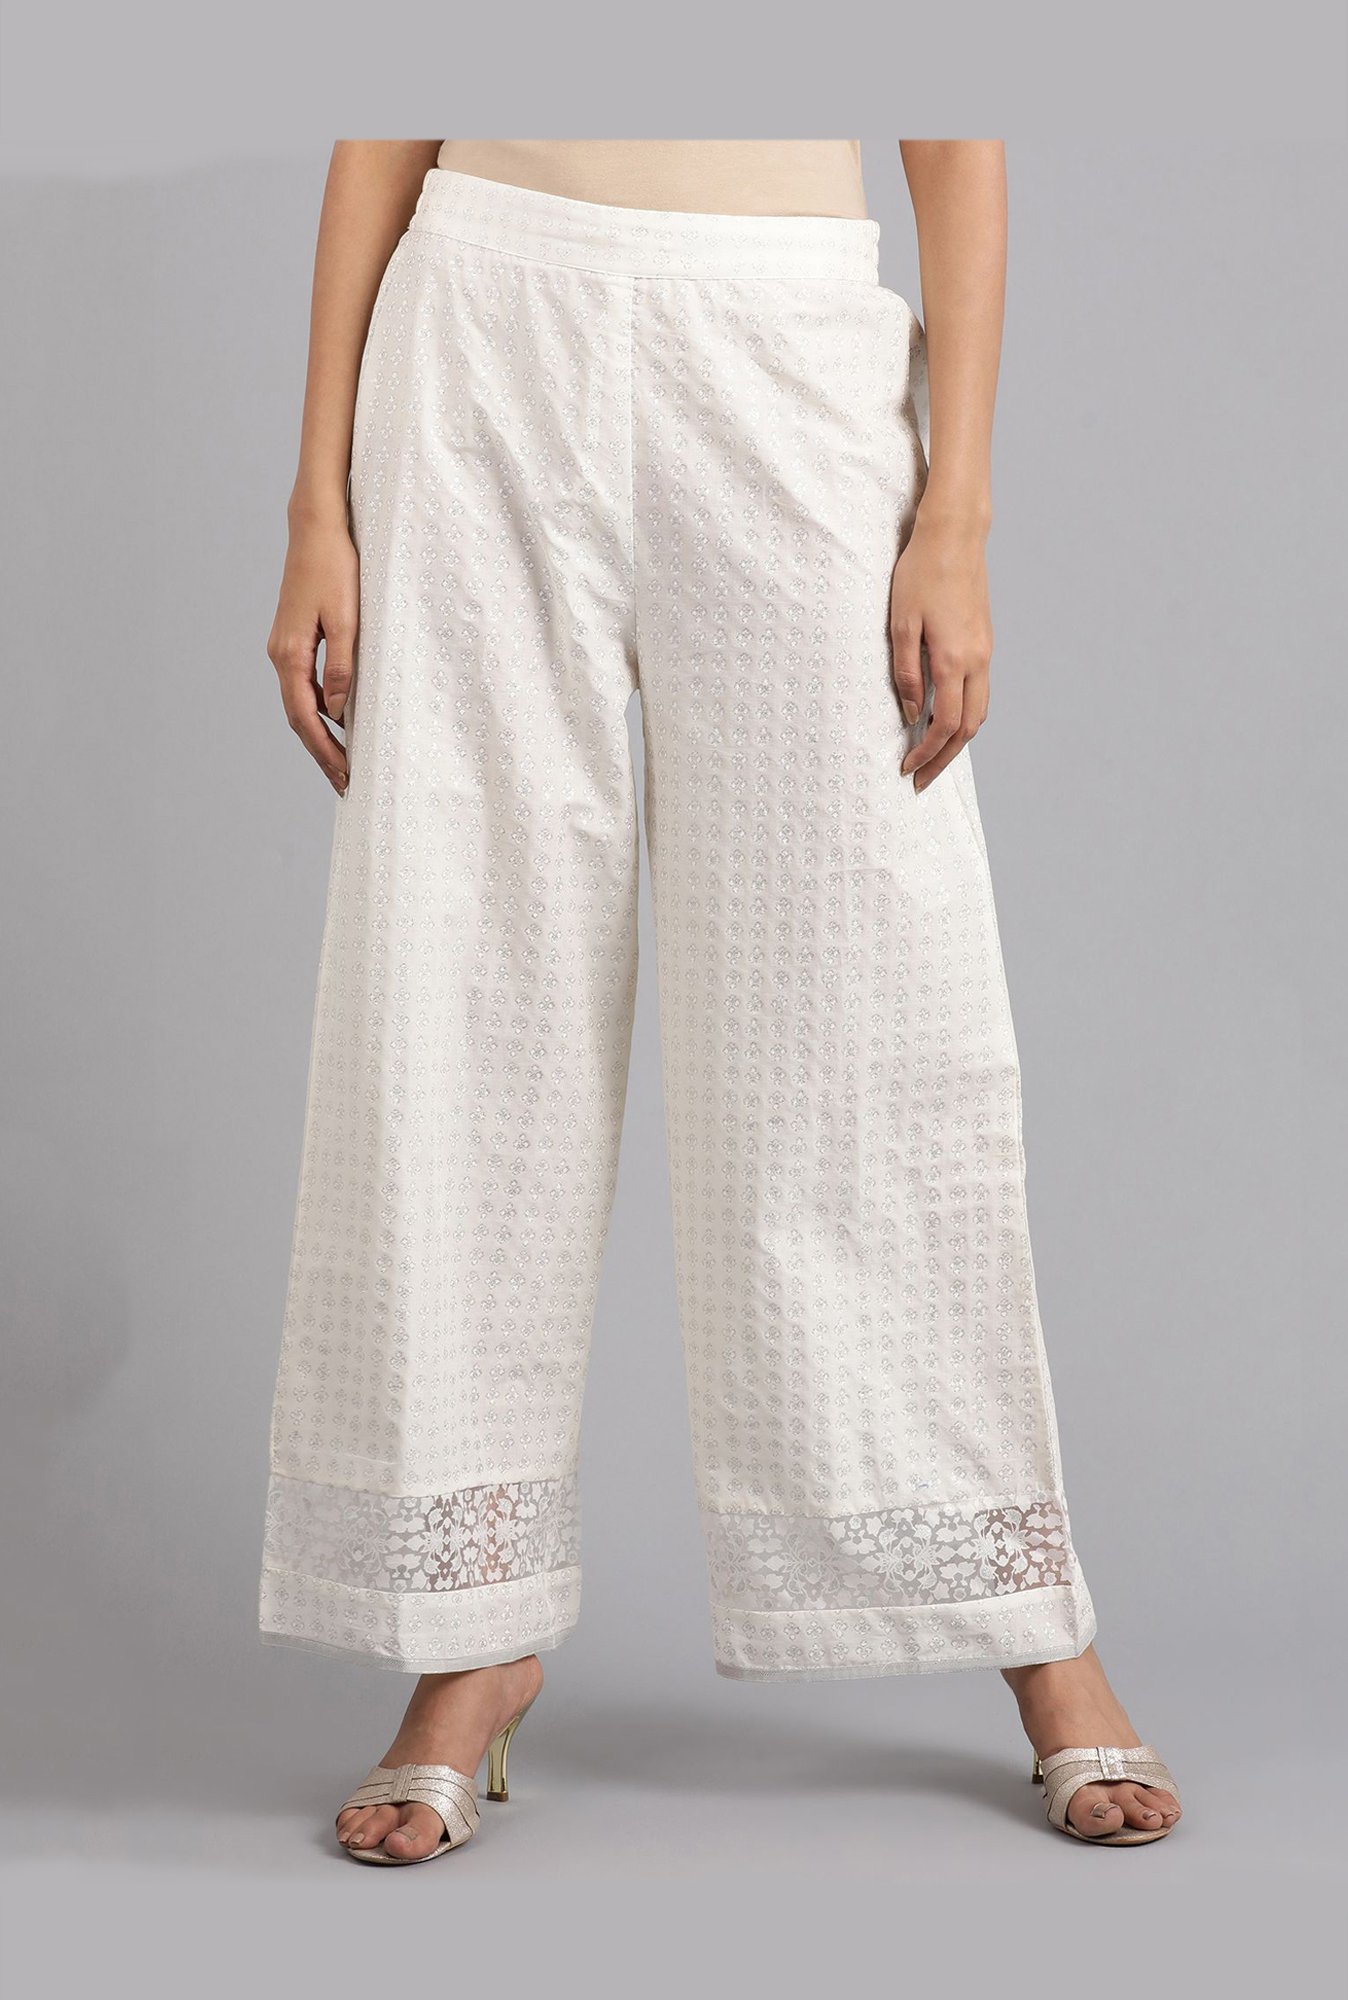 HIVAs Cotton Blend Bootcut Parallel Trouser Pants for Women Regular Fit  Bellbottom Straight Pants for Womens 